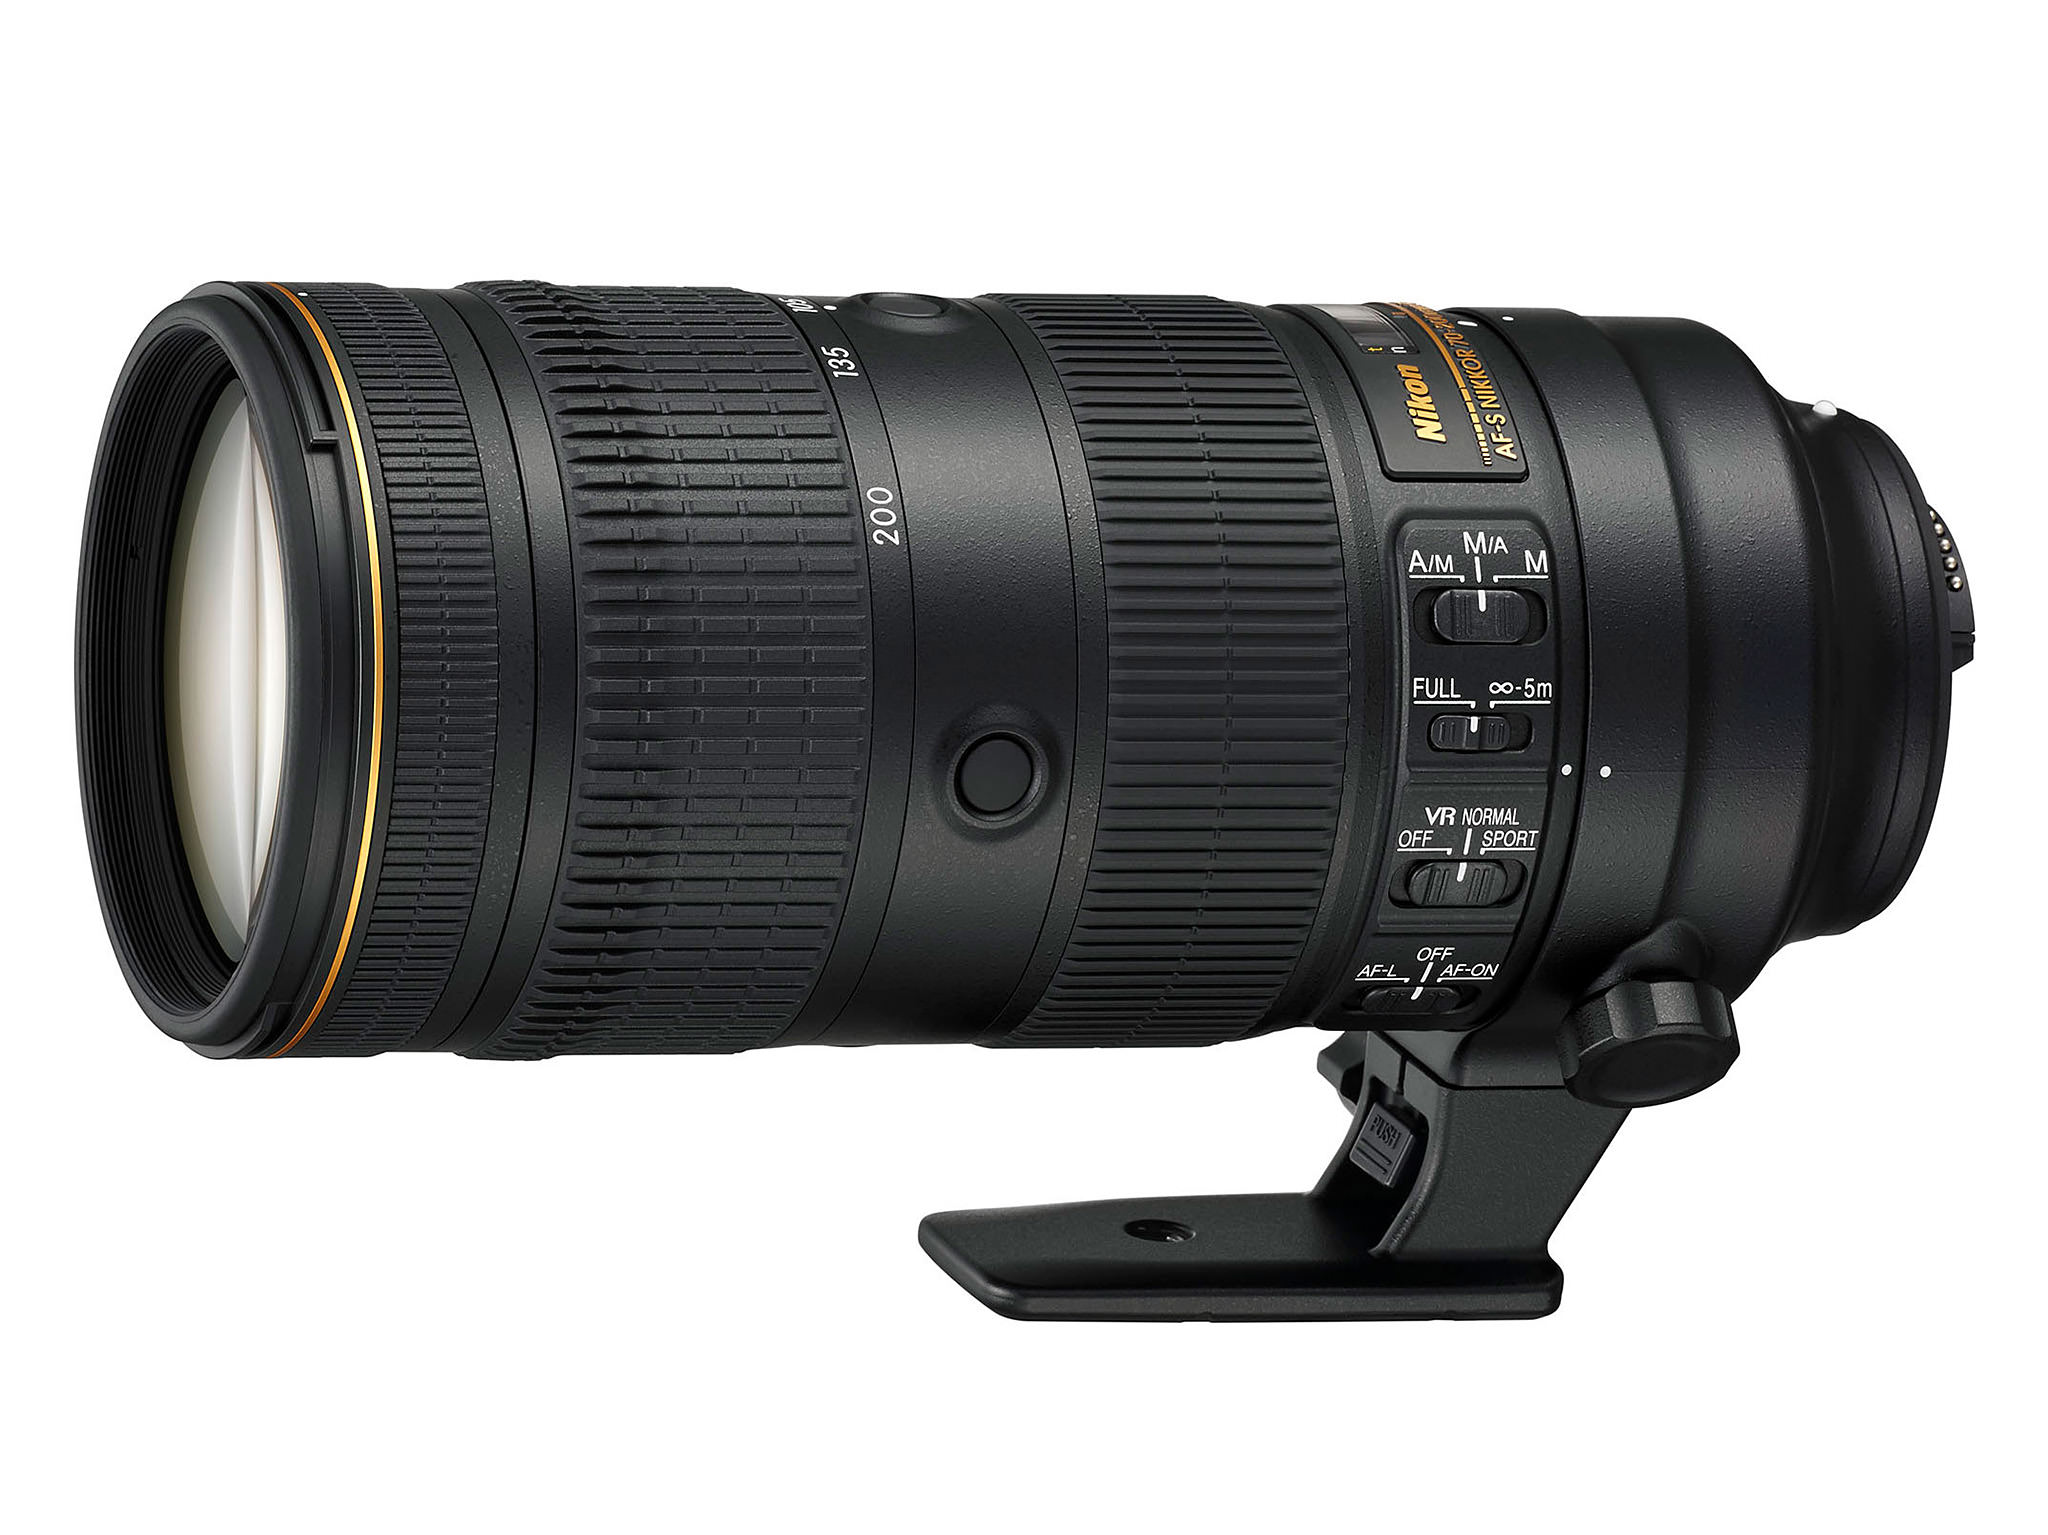 Nikon 70-200mm f/2.8E FL VR Review